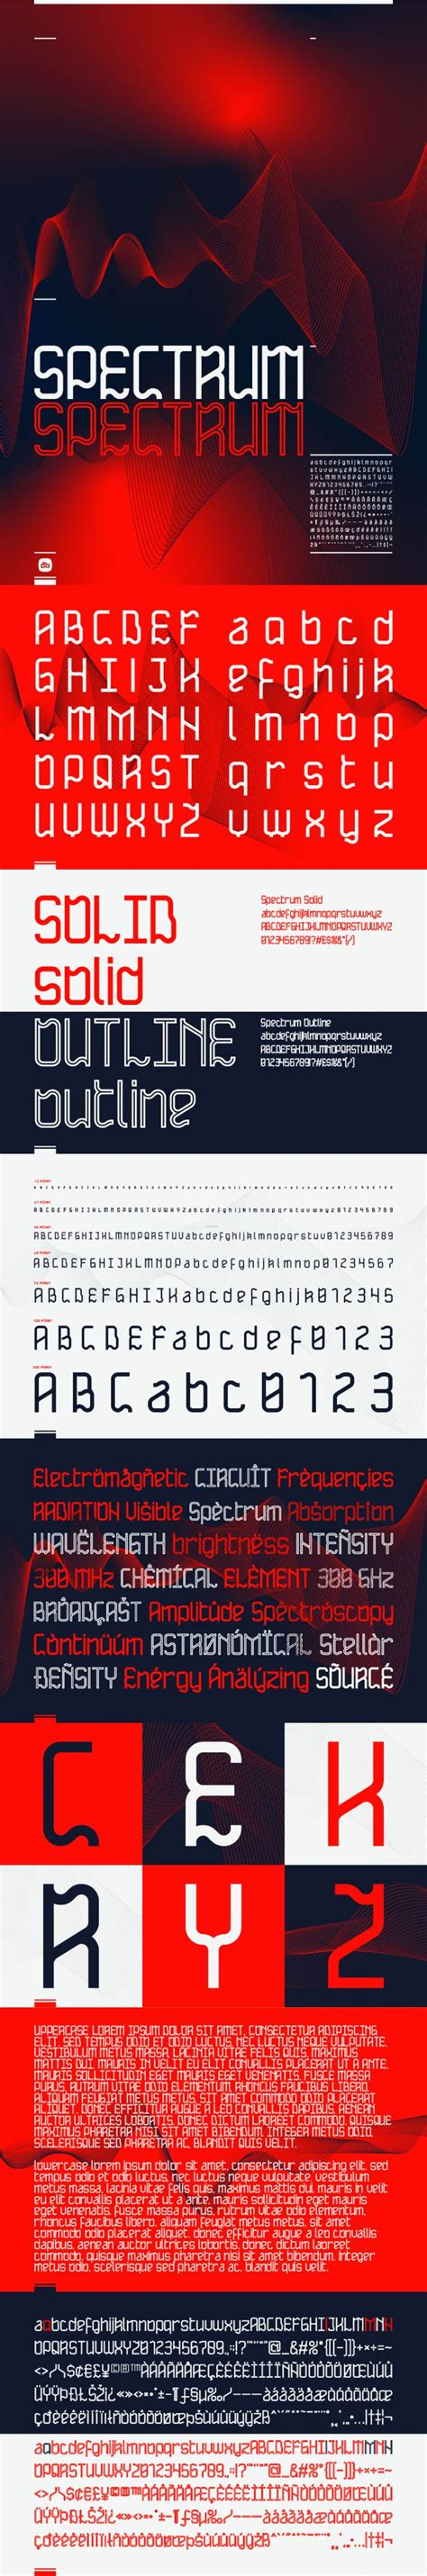 Spectrum Free Font On Behance In 2021 Free Font Spectrum Fonts